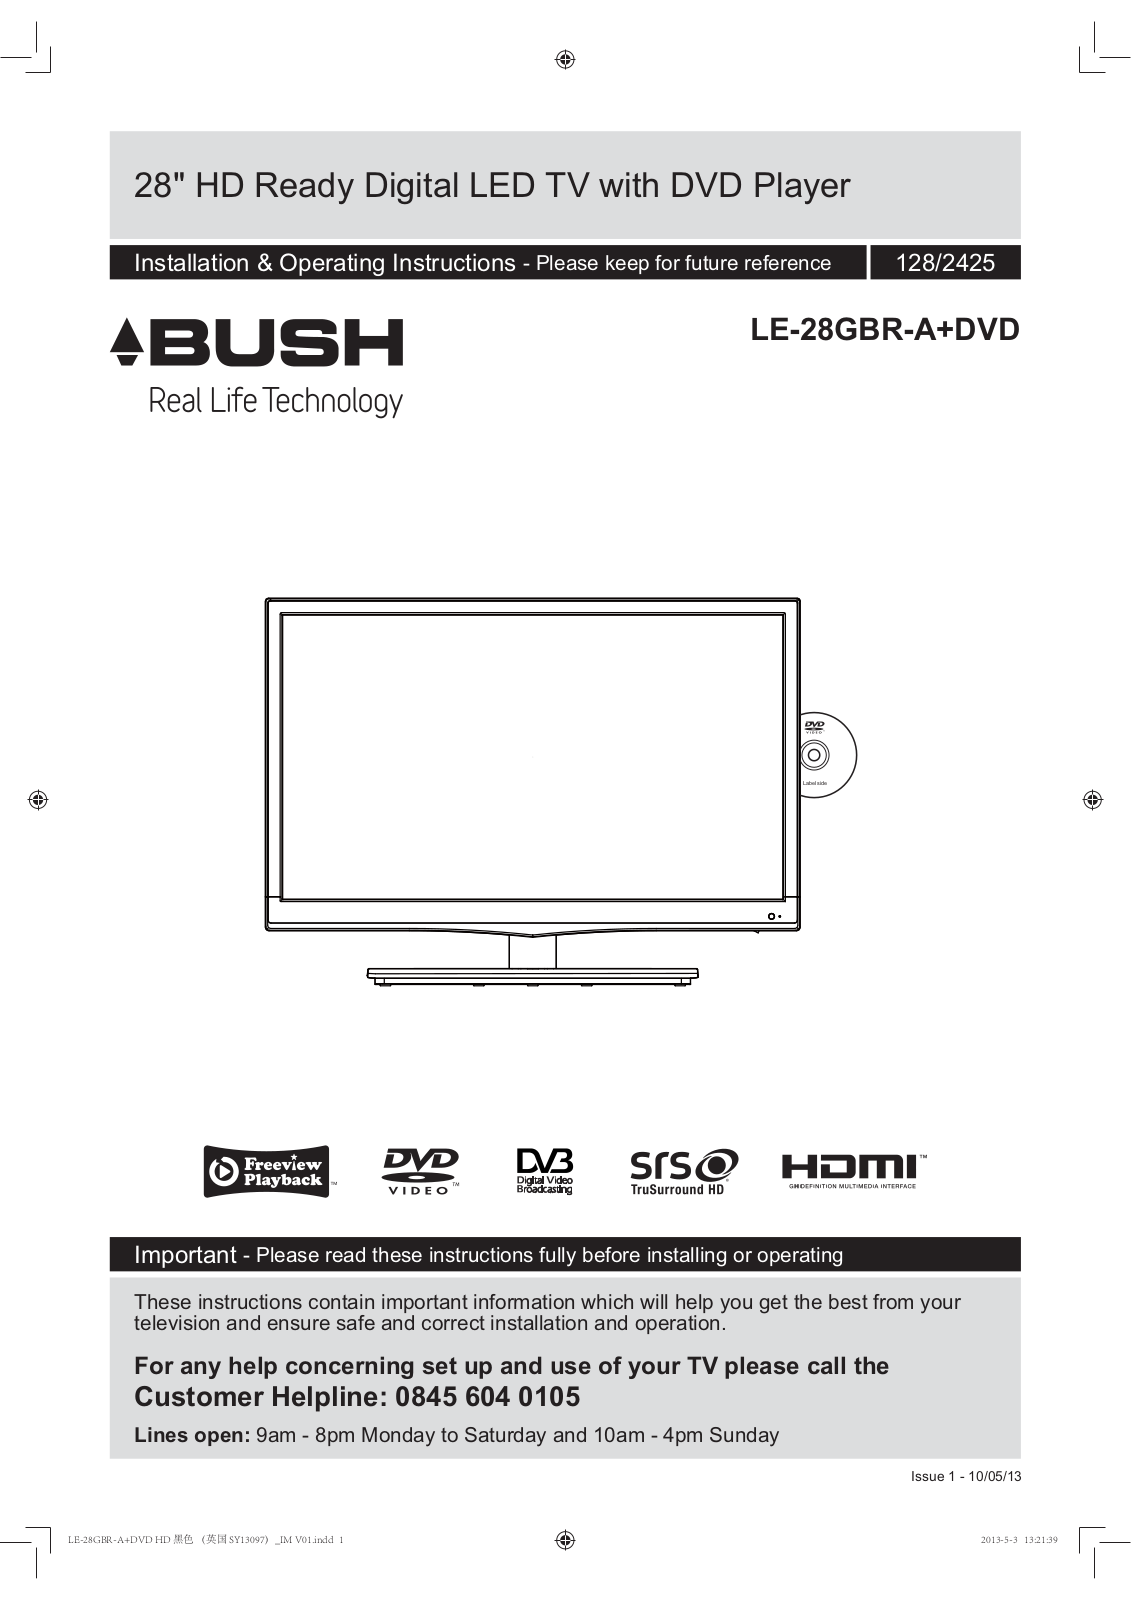 Bush LE-28GBR-A+DVD Instruction manual